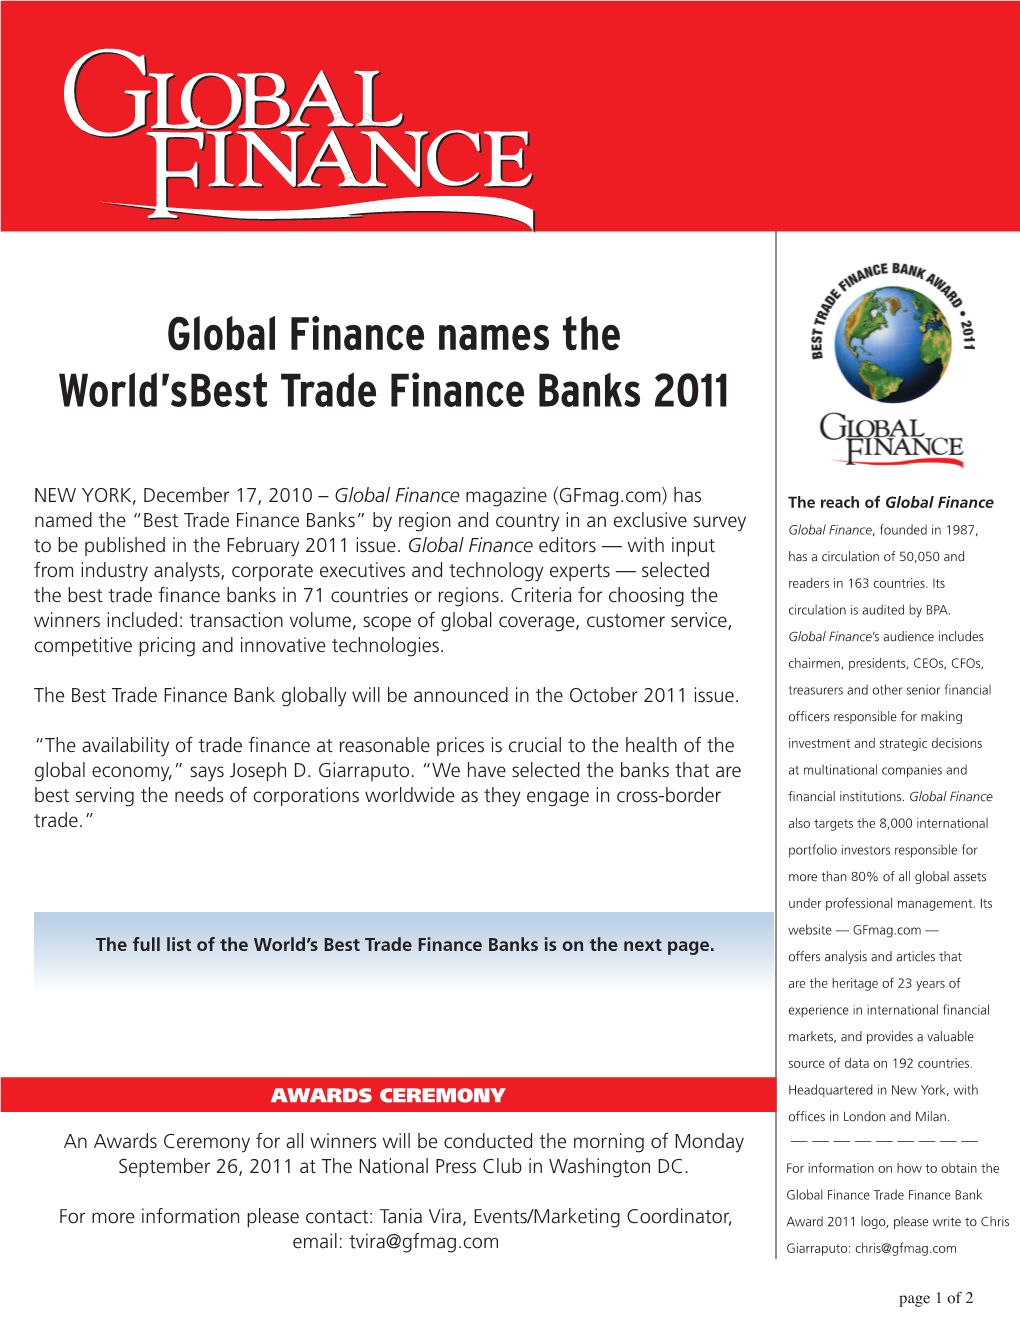 Global Finance Names the World'sbest Trade Finance Banks